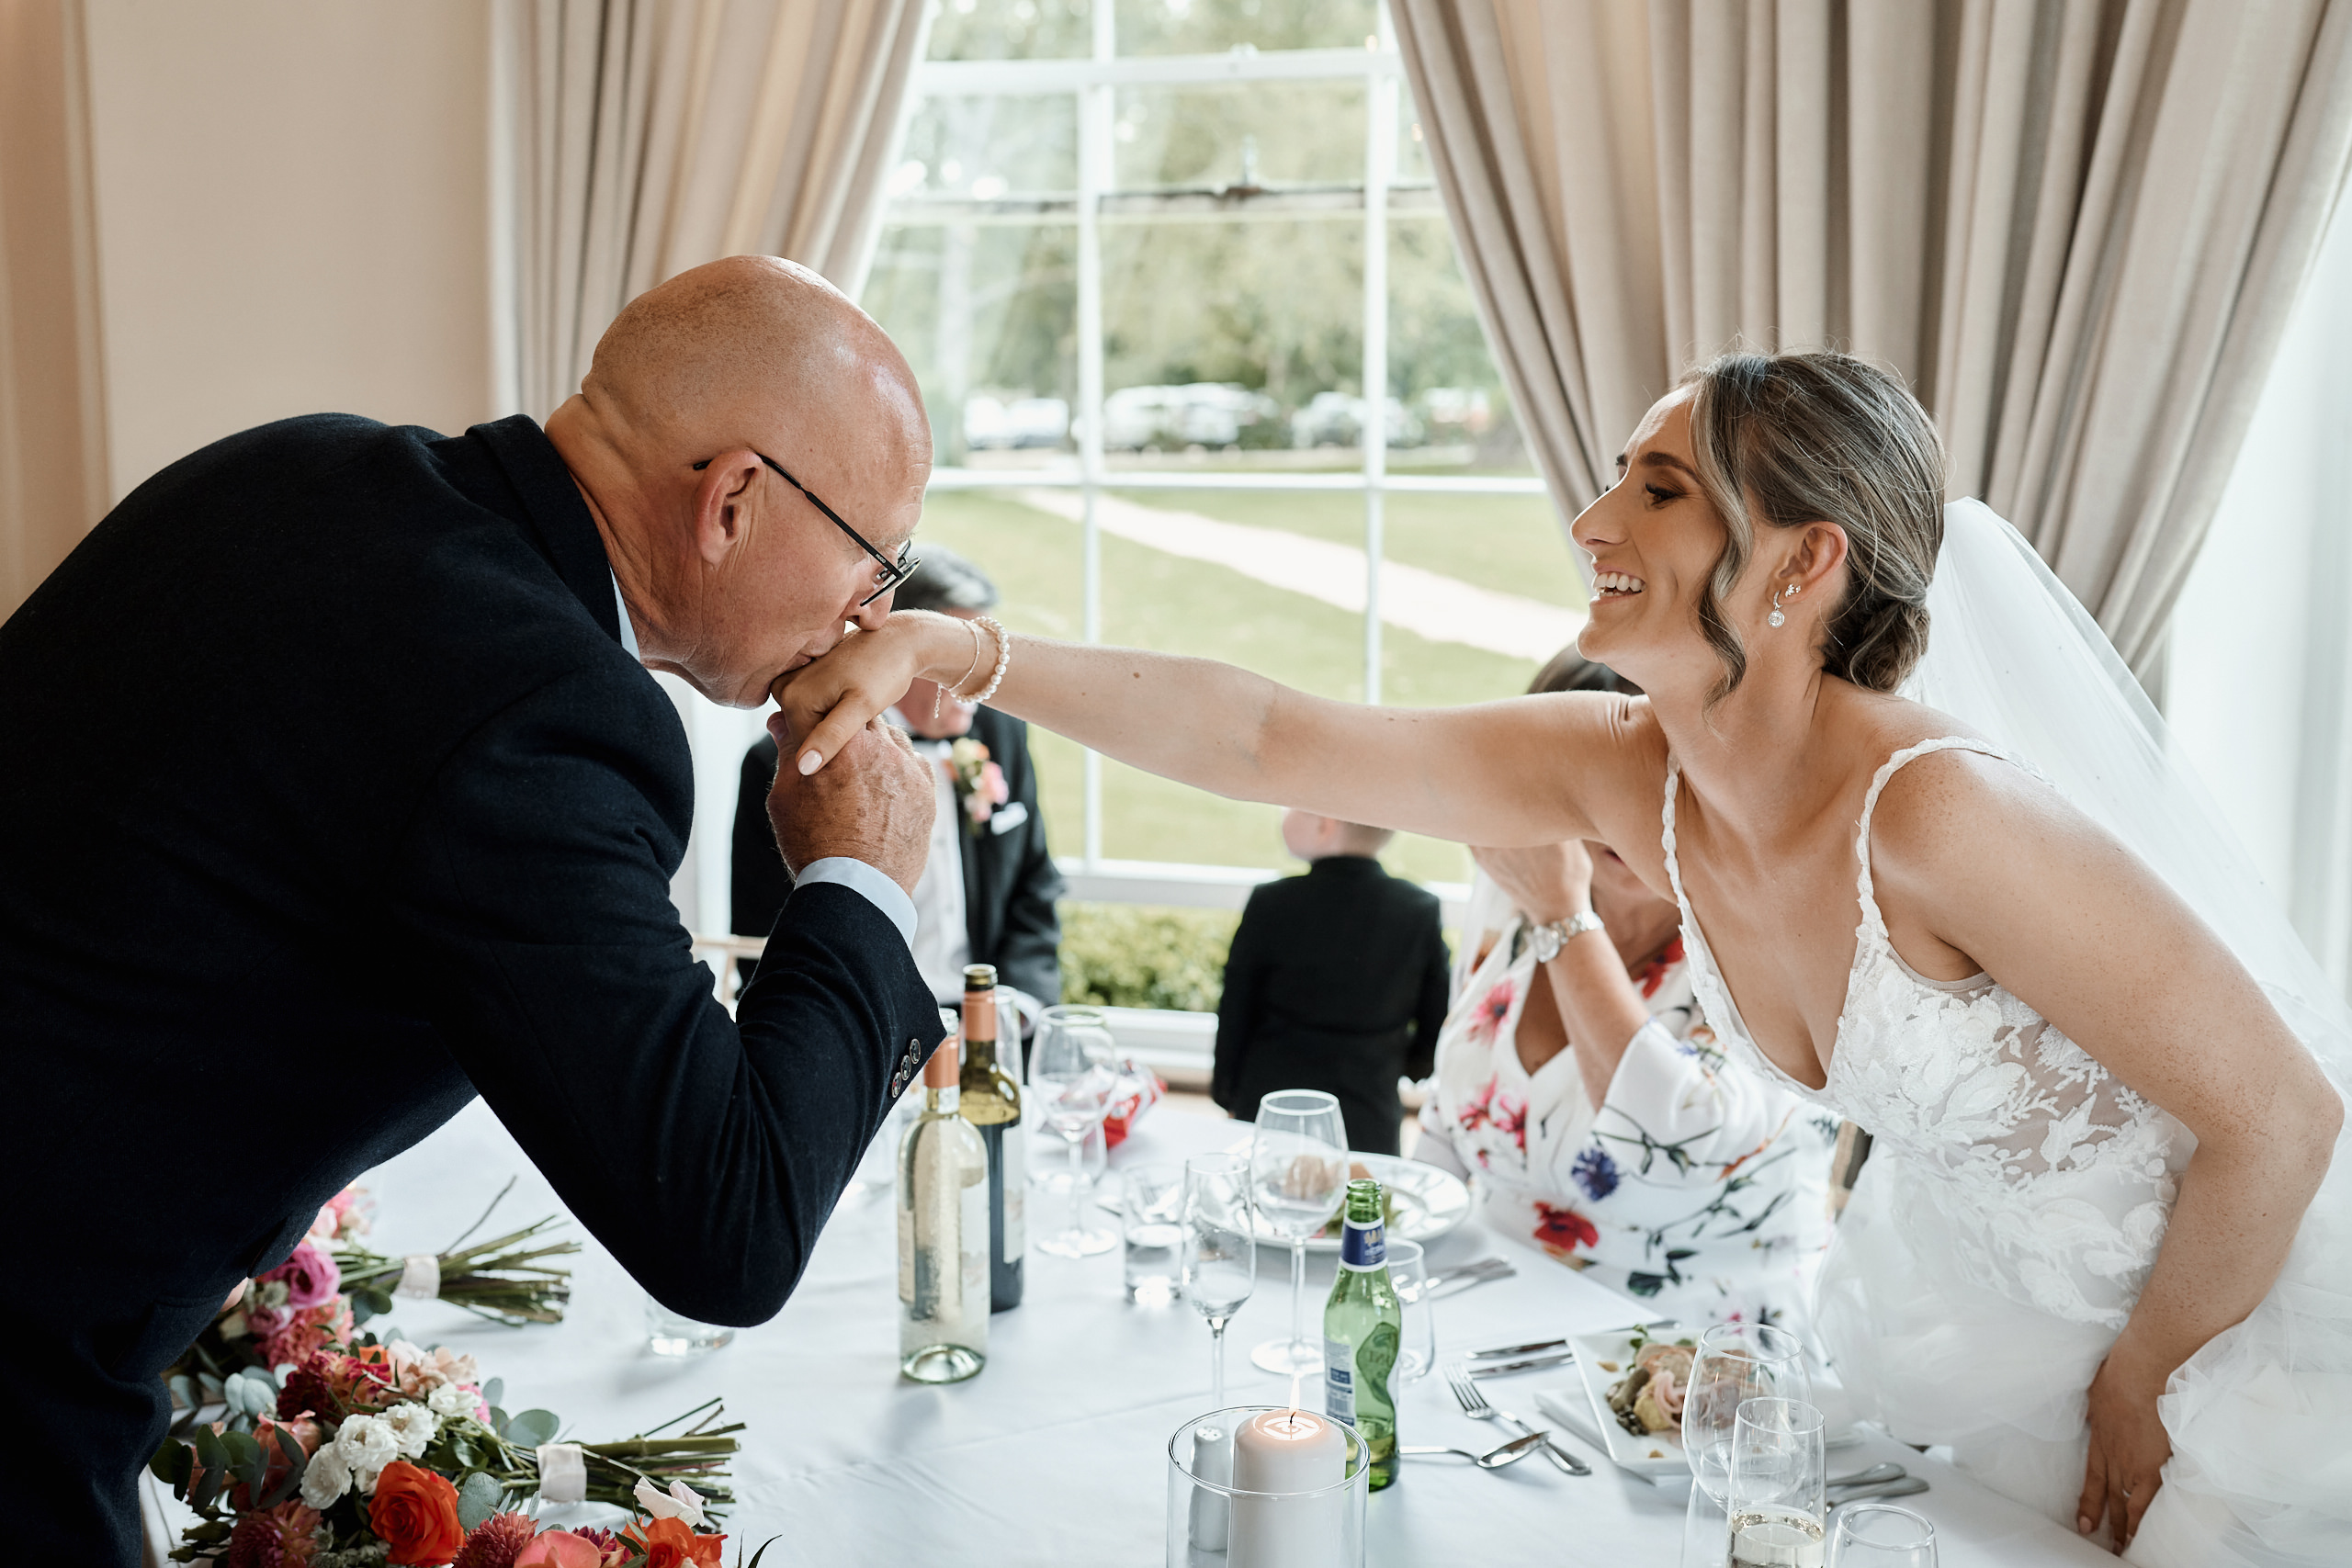 A bride and groom feeding each other at a wedding reception.